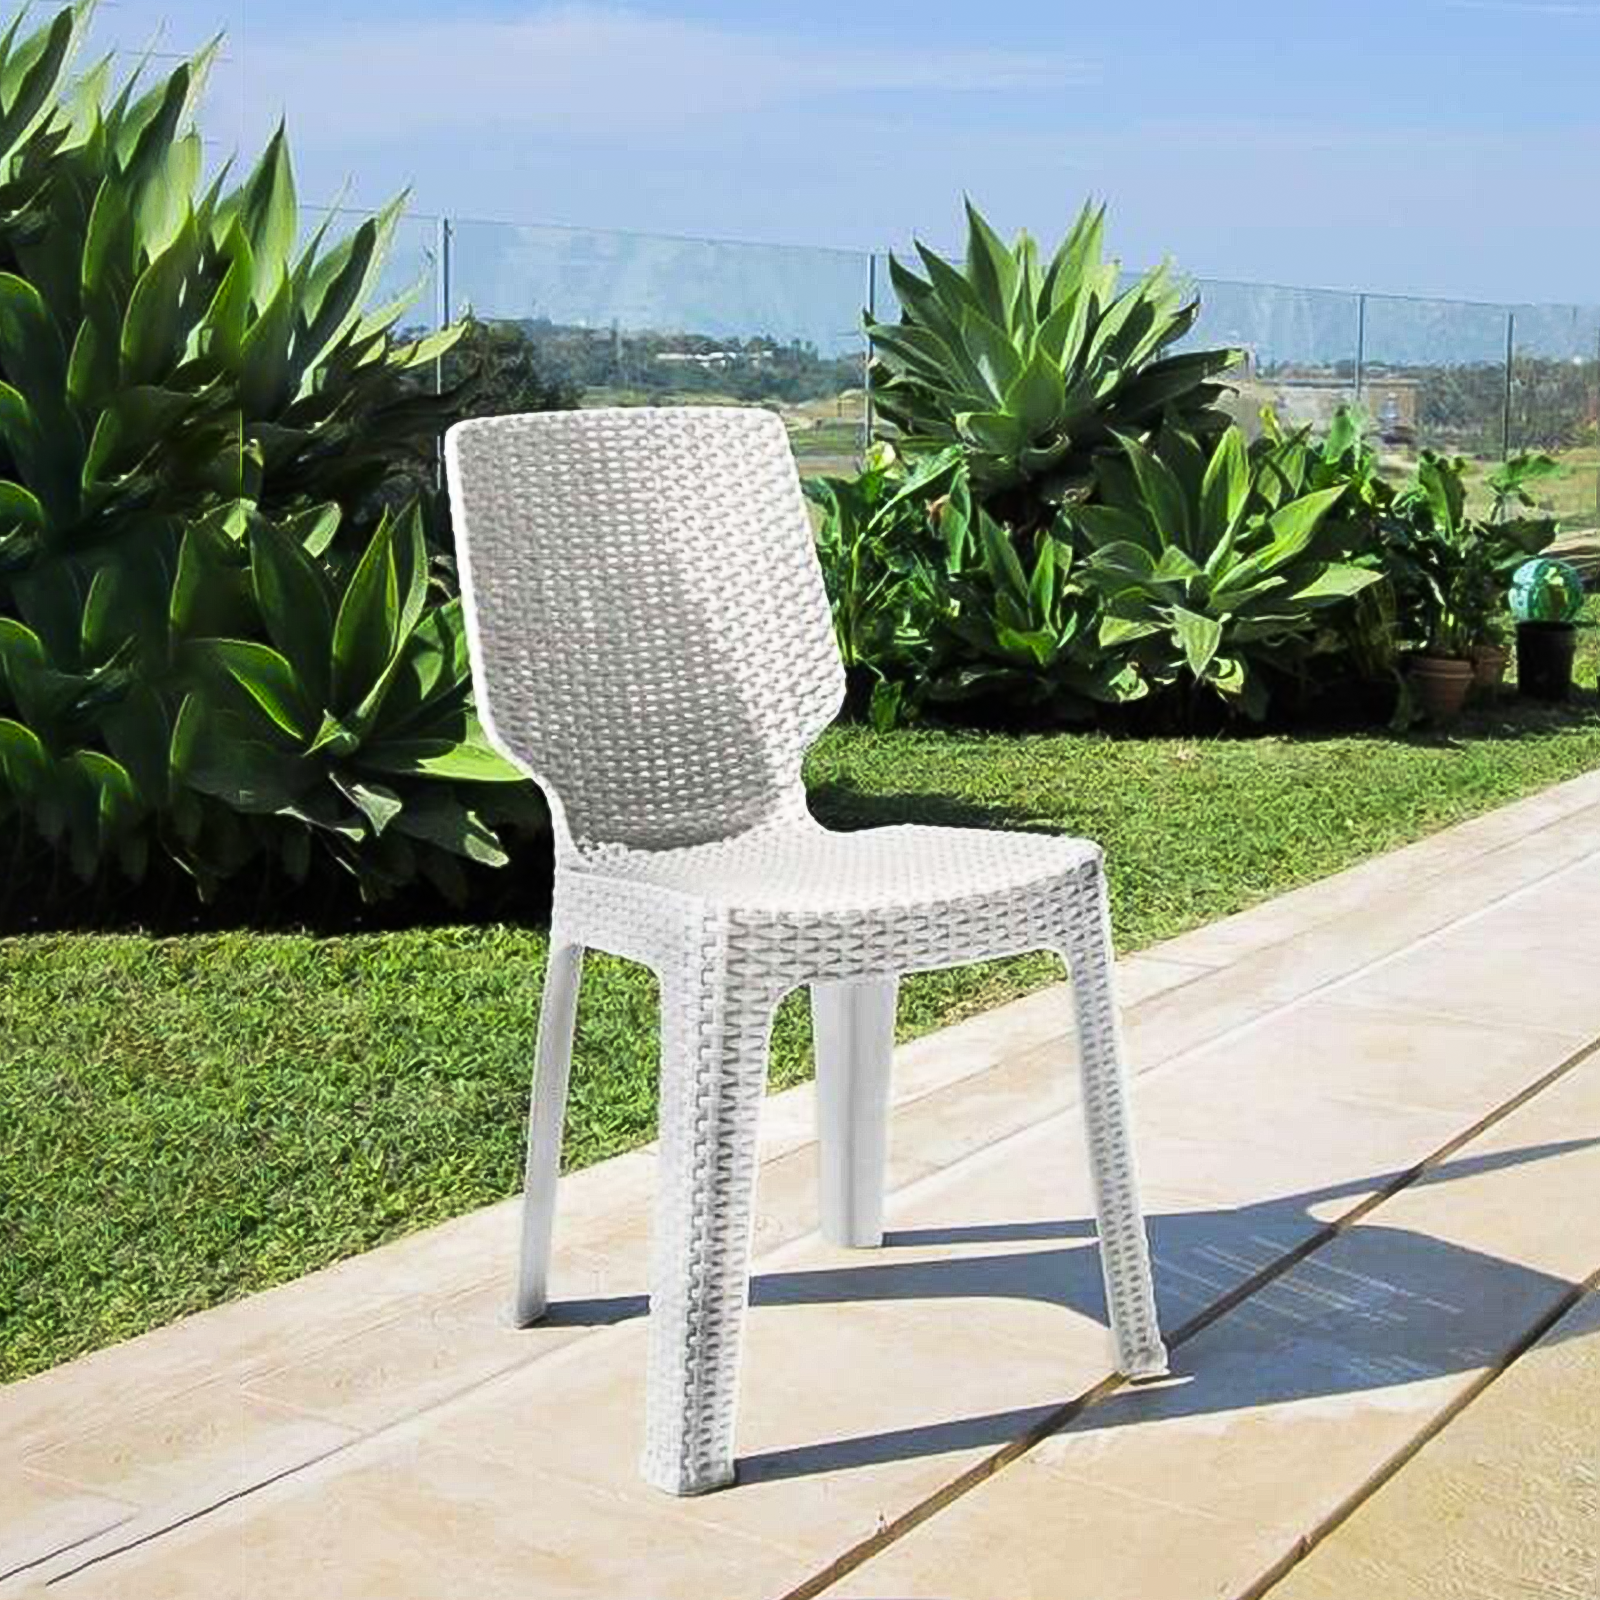 Sedia da pranzo bianca T-Chair in resina rattan per giardino